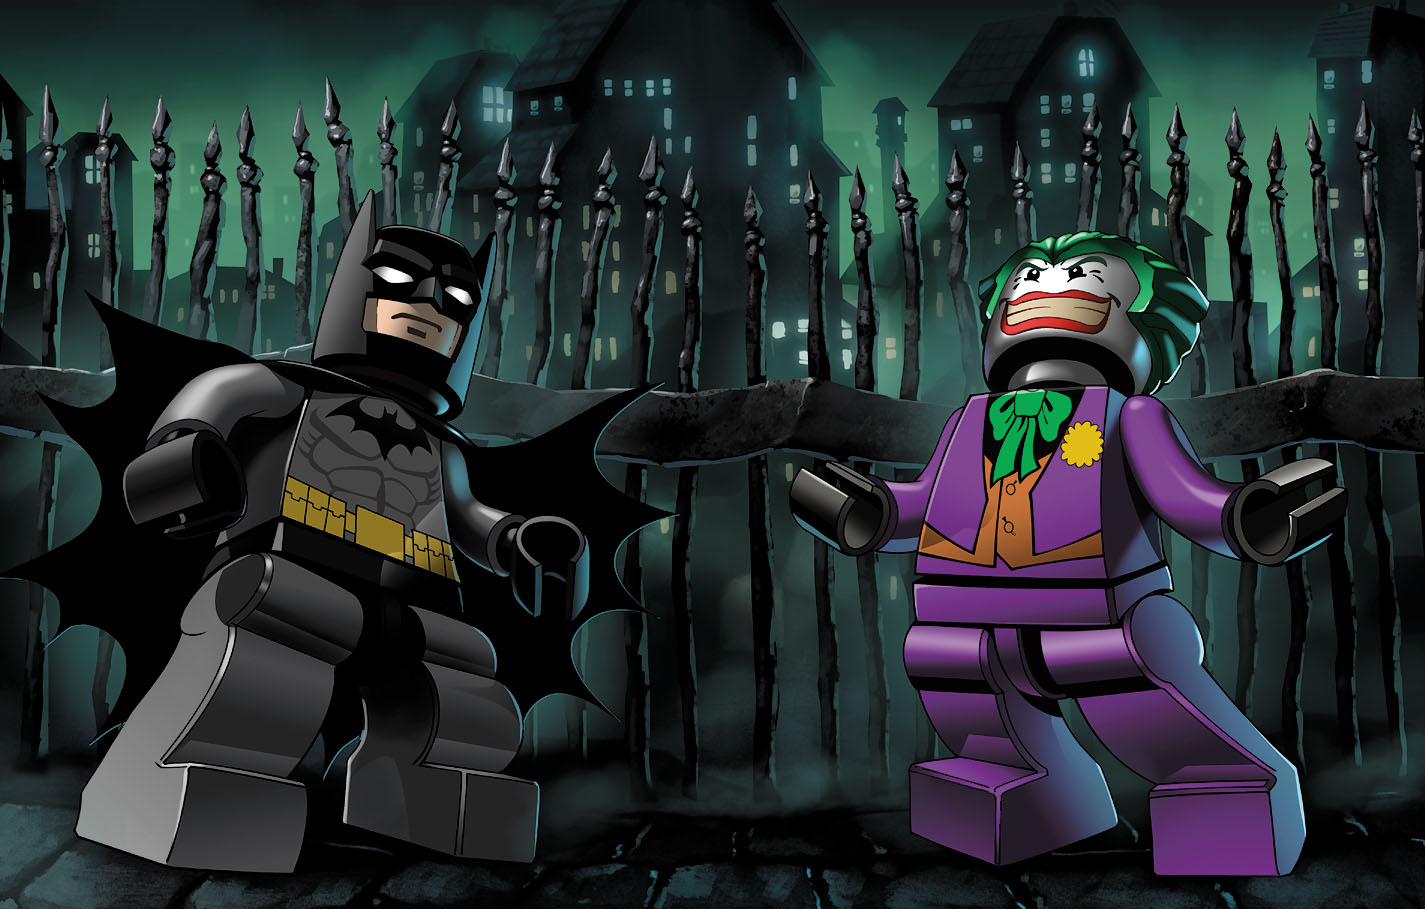 Fotos de Lego Batman / Imagenes de Lego Batman - Photos